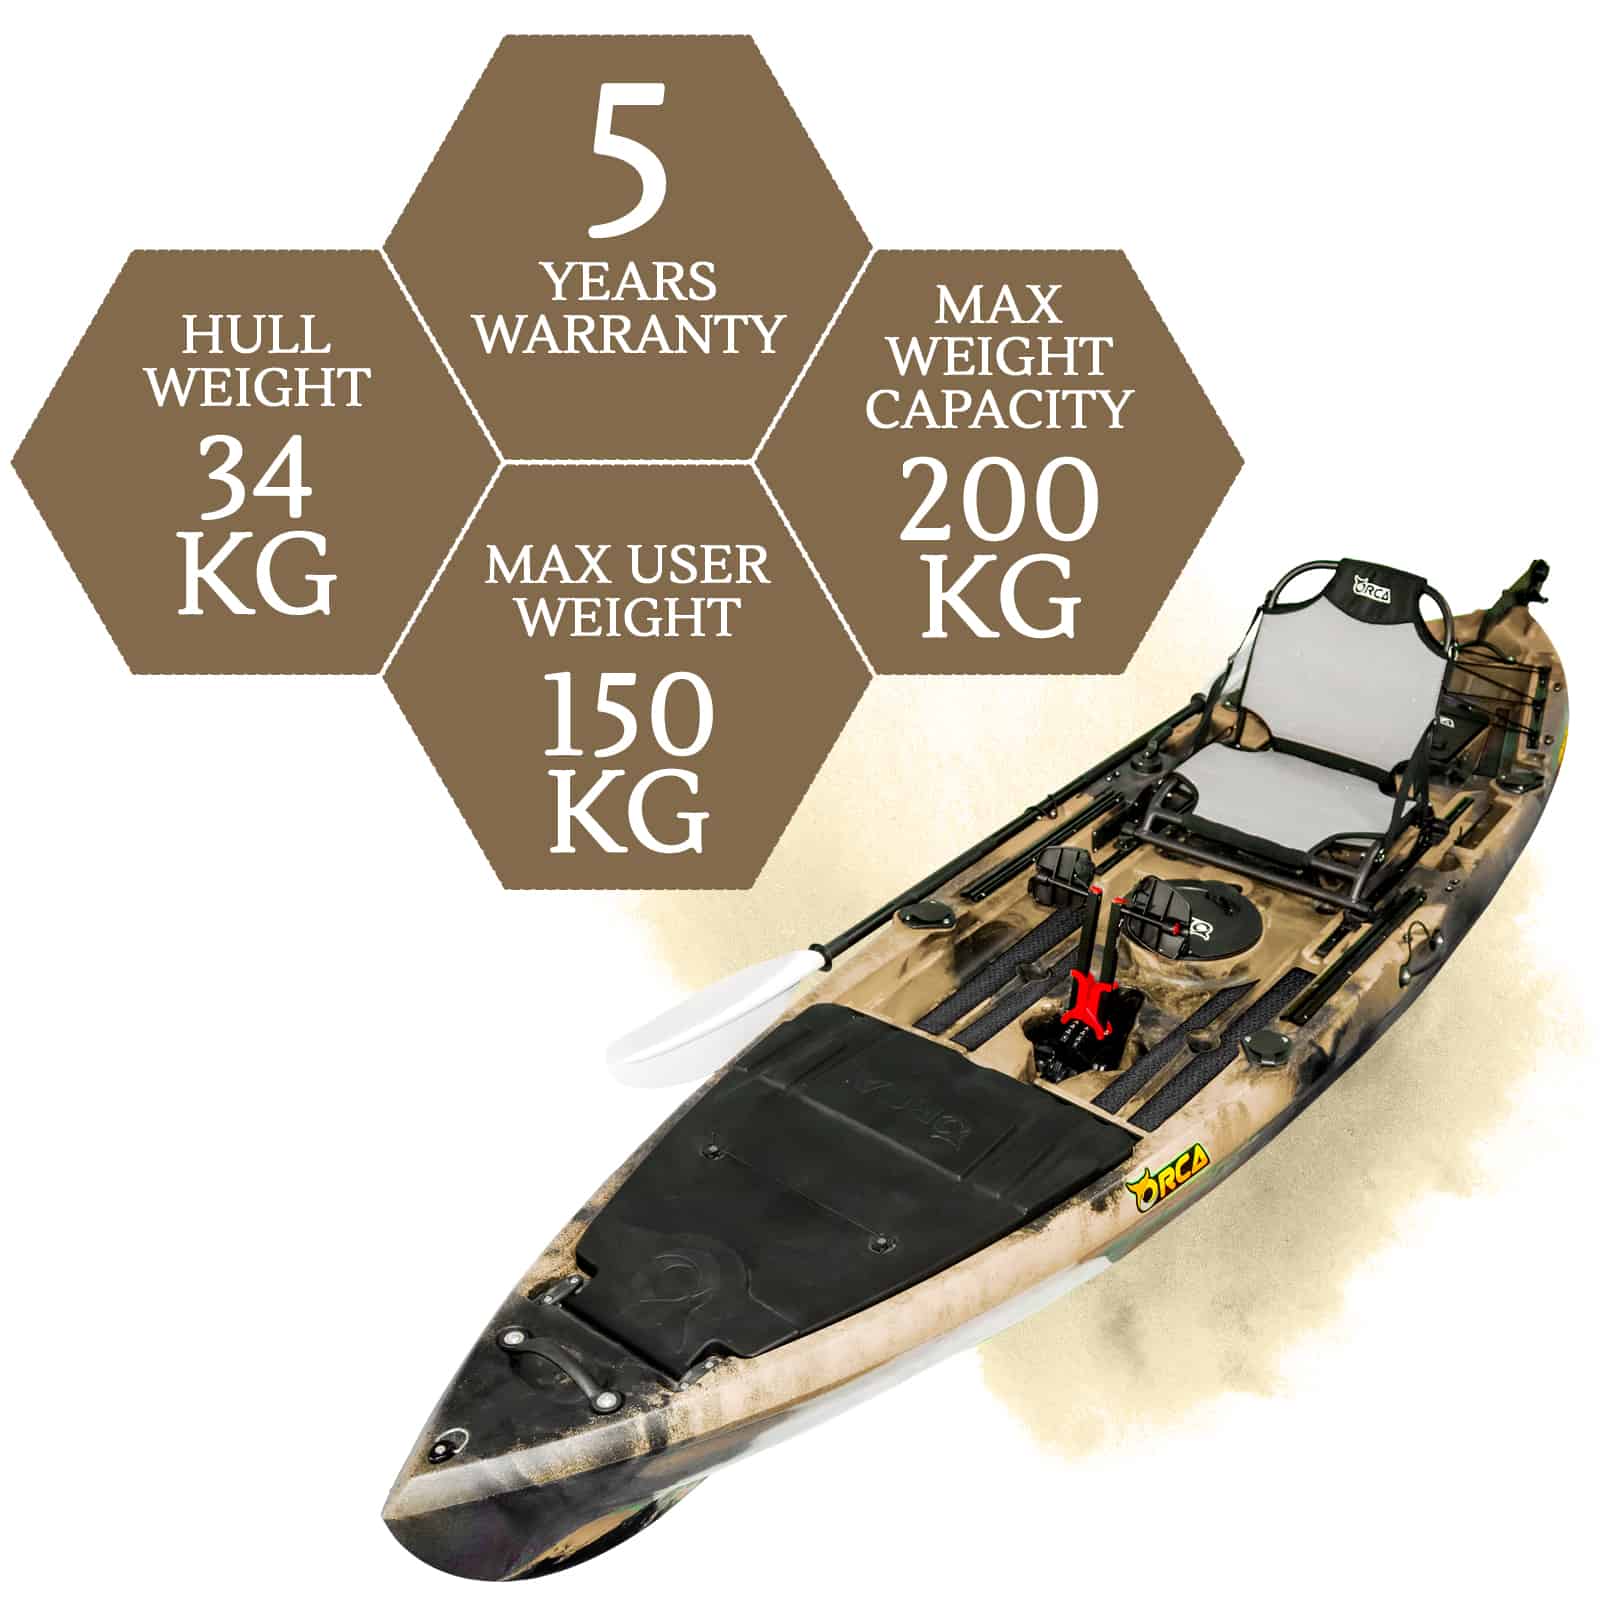 ON-KRONOS-SAHARA-MAX specifications